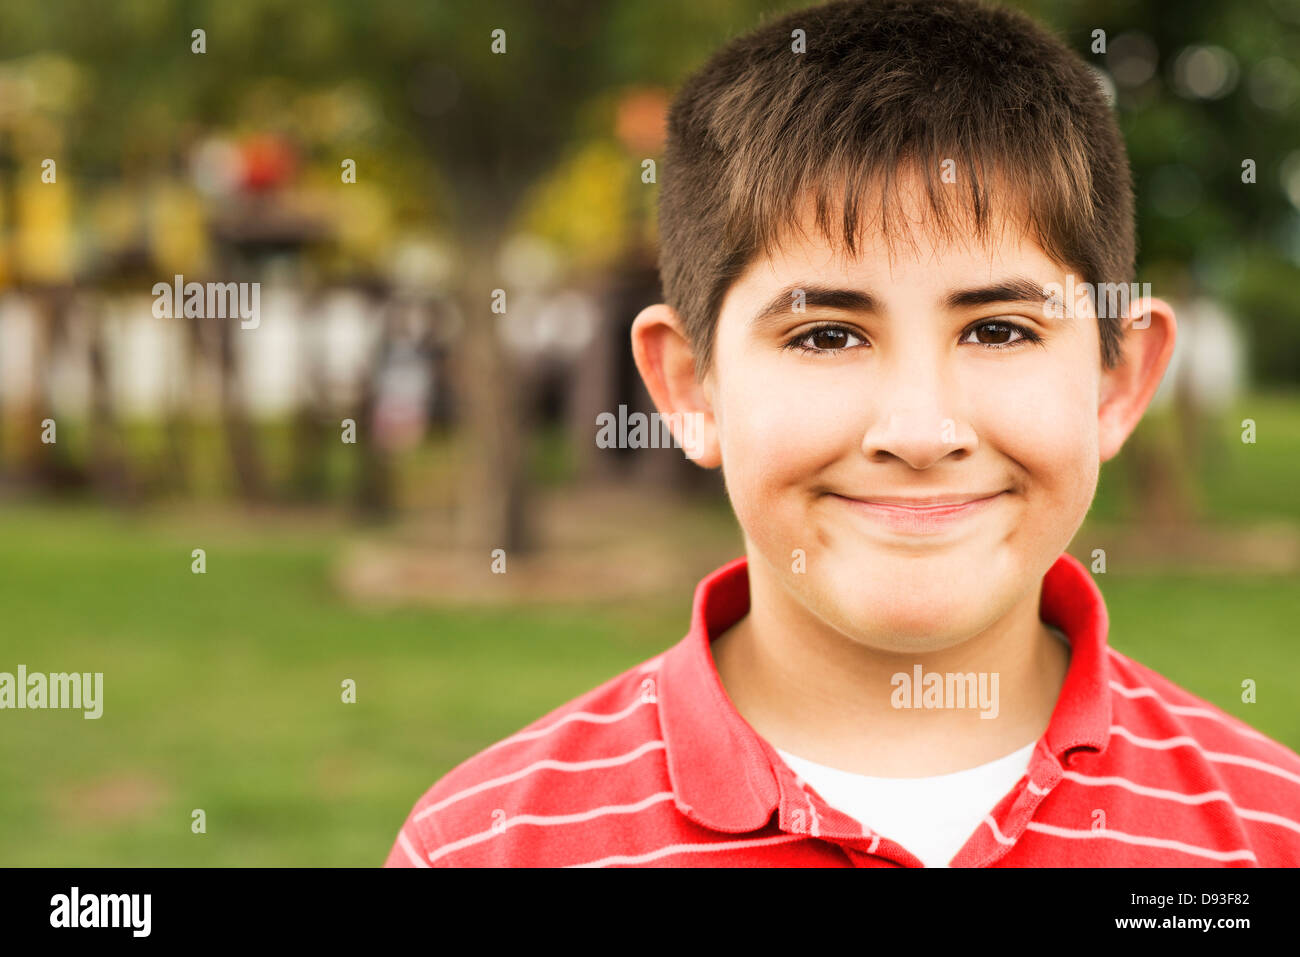 Hispanic boy smiling Stock Photo